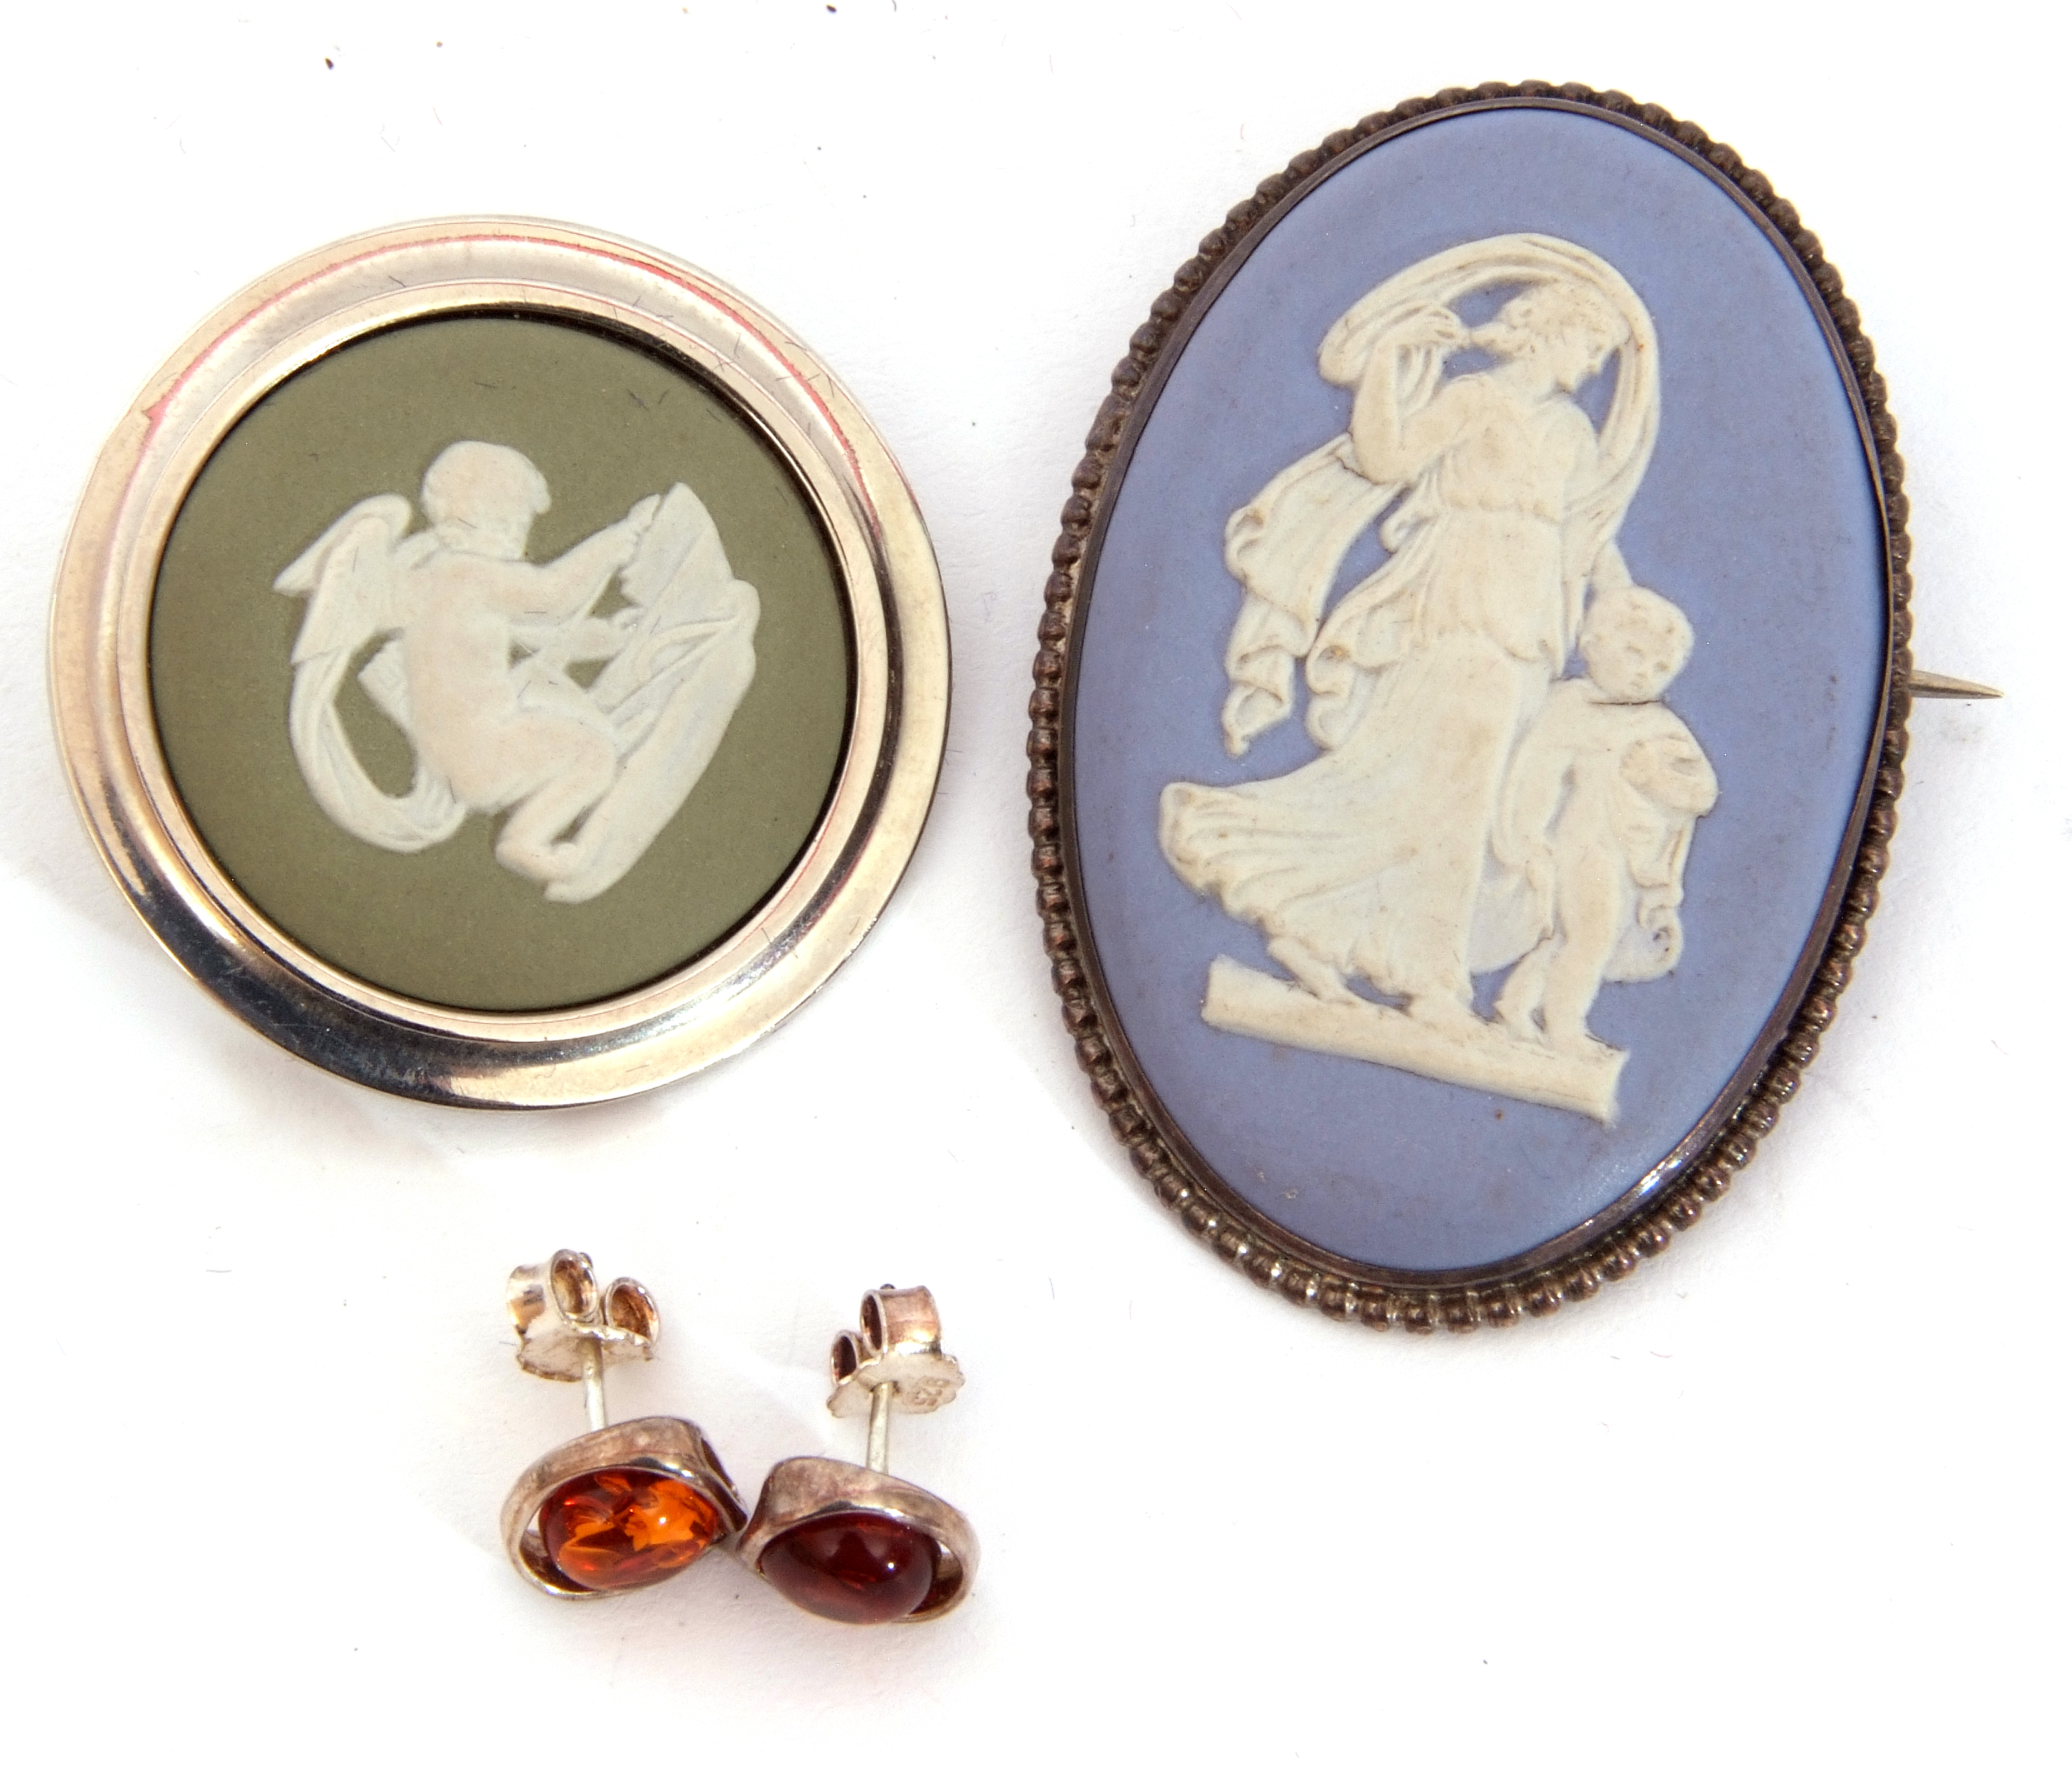 Mixed Lot: oval shaped Wedgwood light blue jasperware brooch depicting a goddess and a cherub, a